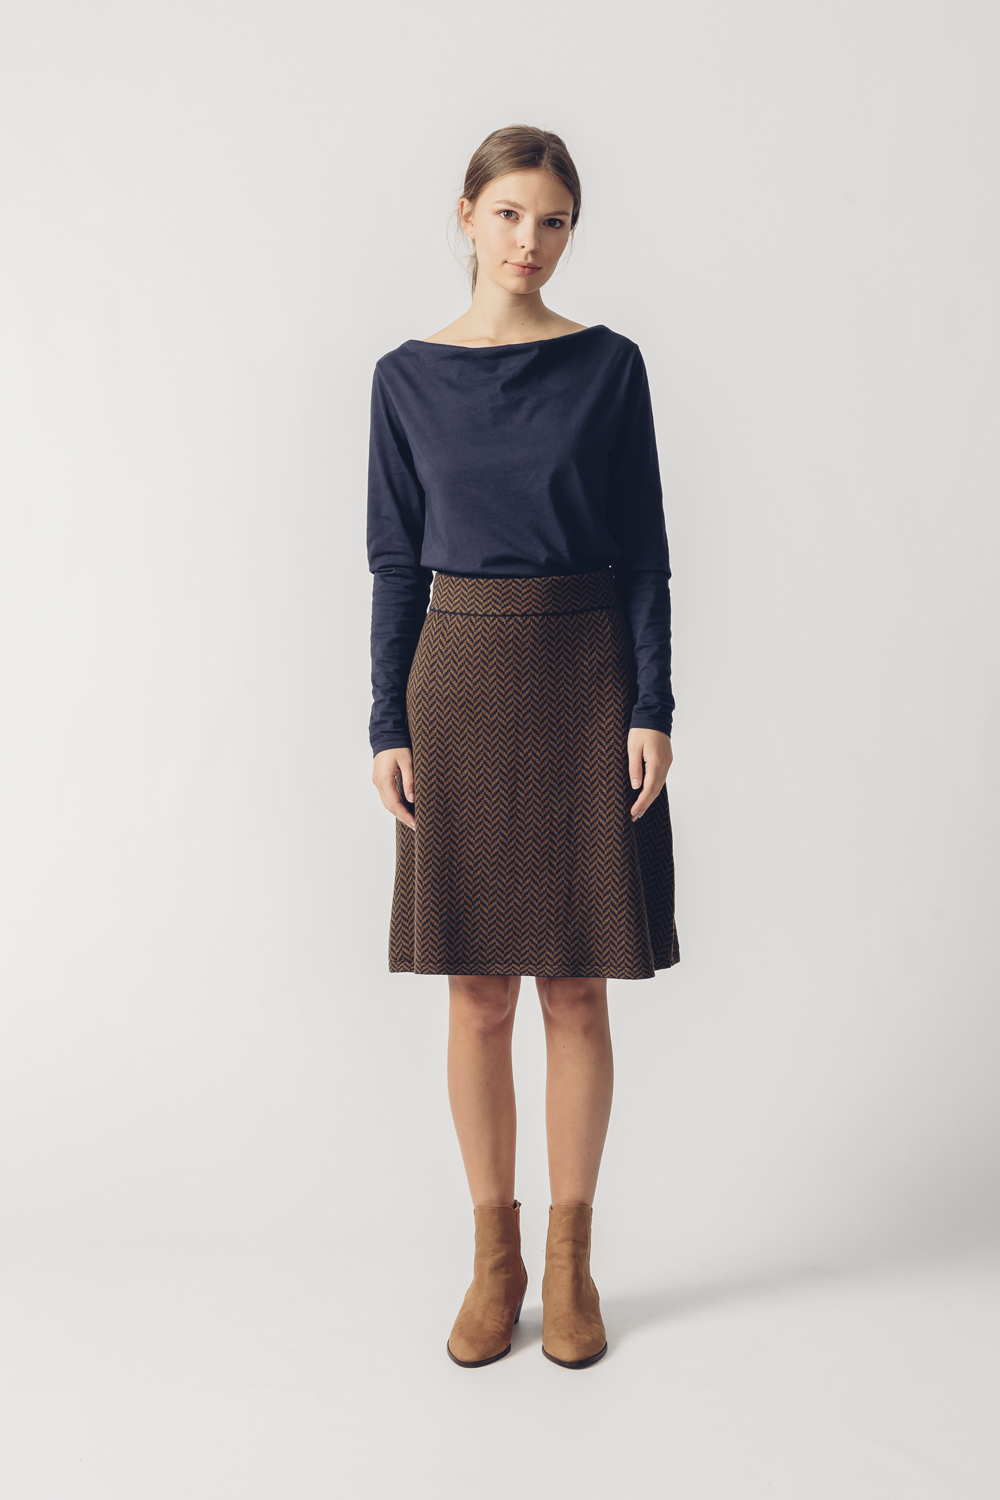 Arane Short Women Skirt dark blue/brown 42